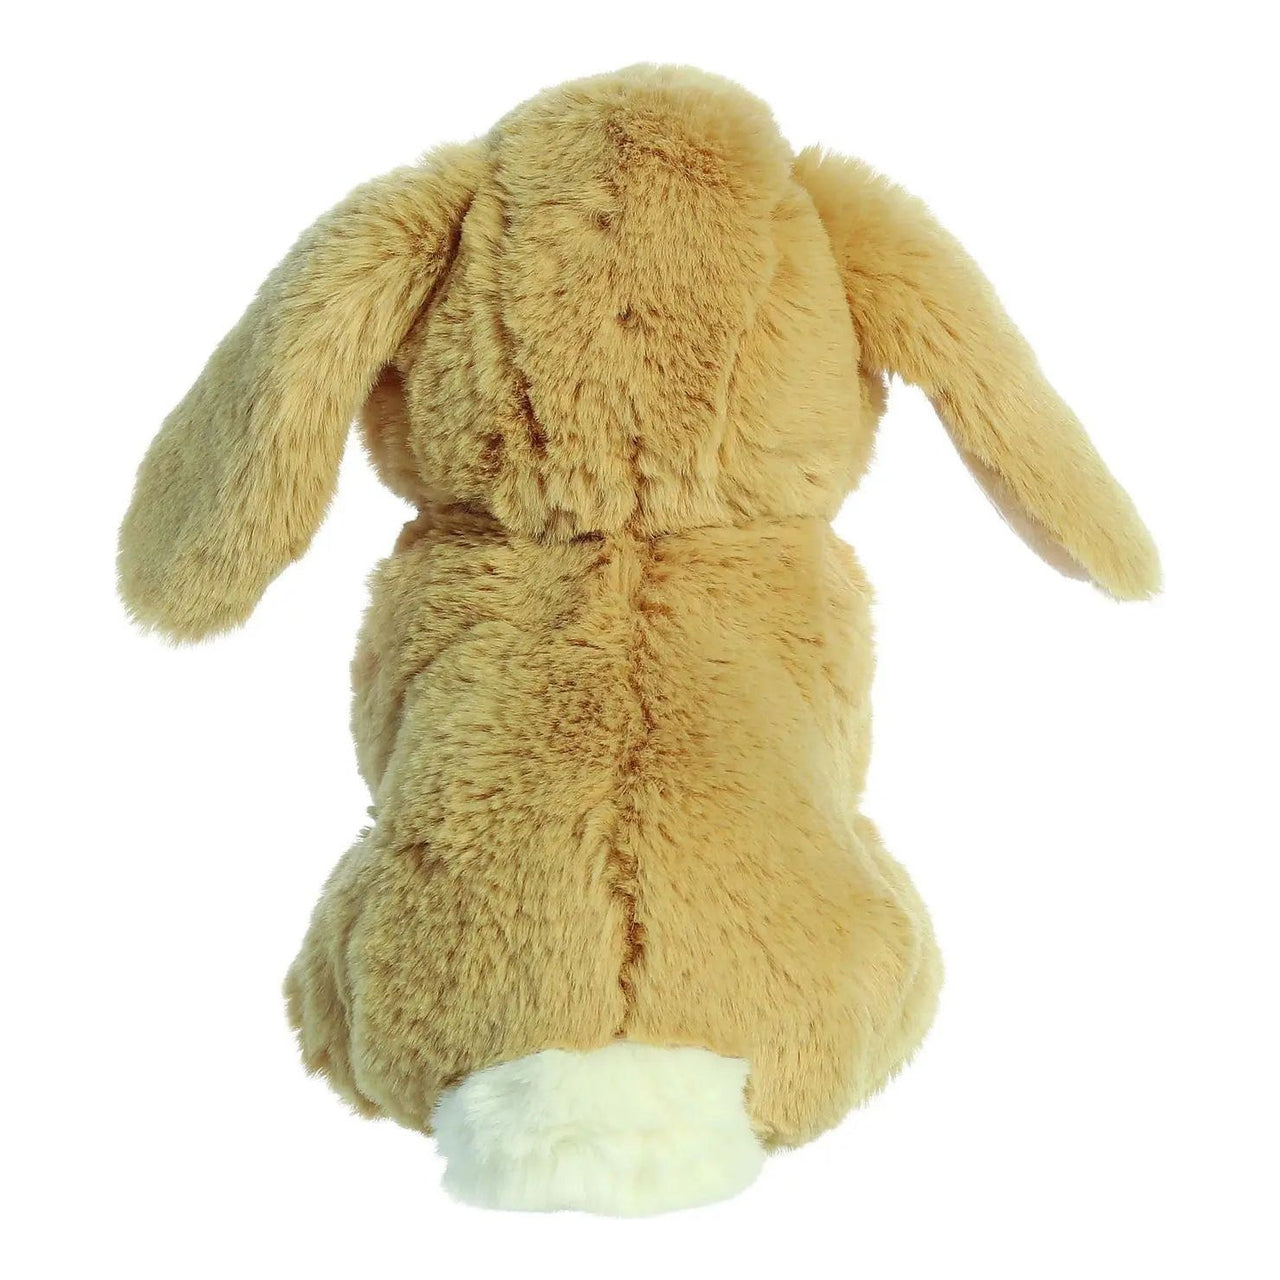 Eco Nation Lop-Eared Rabbit Tan 9" Plush Toy Aurora